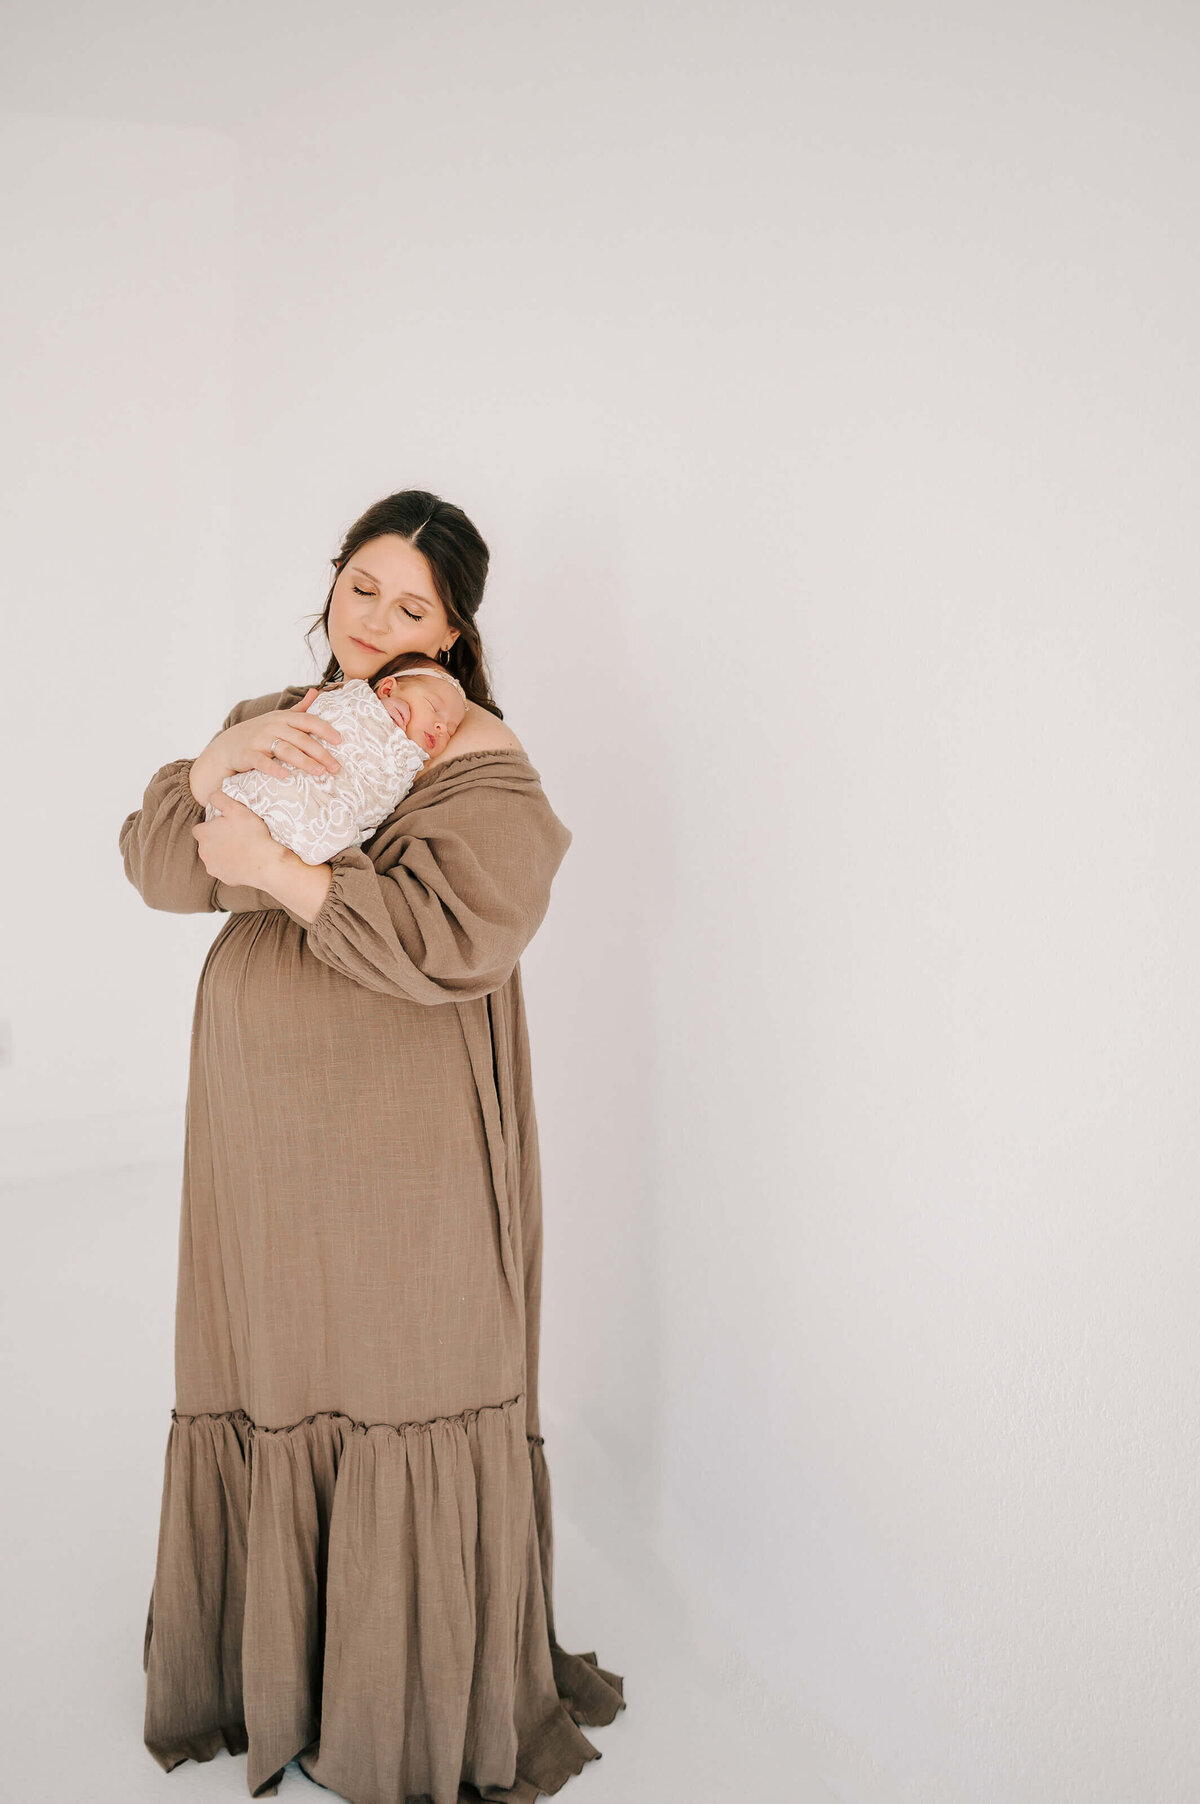 Springfield Mo newborn photgrapher Jessica Kennedy of The XO Photography captures mom standing holding sleeping newborn